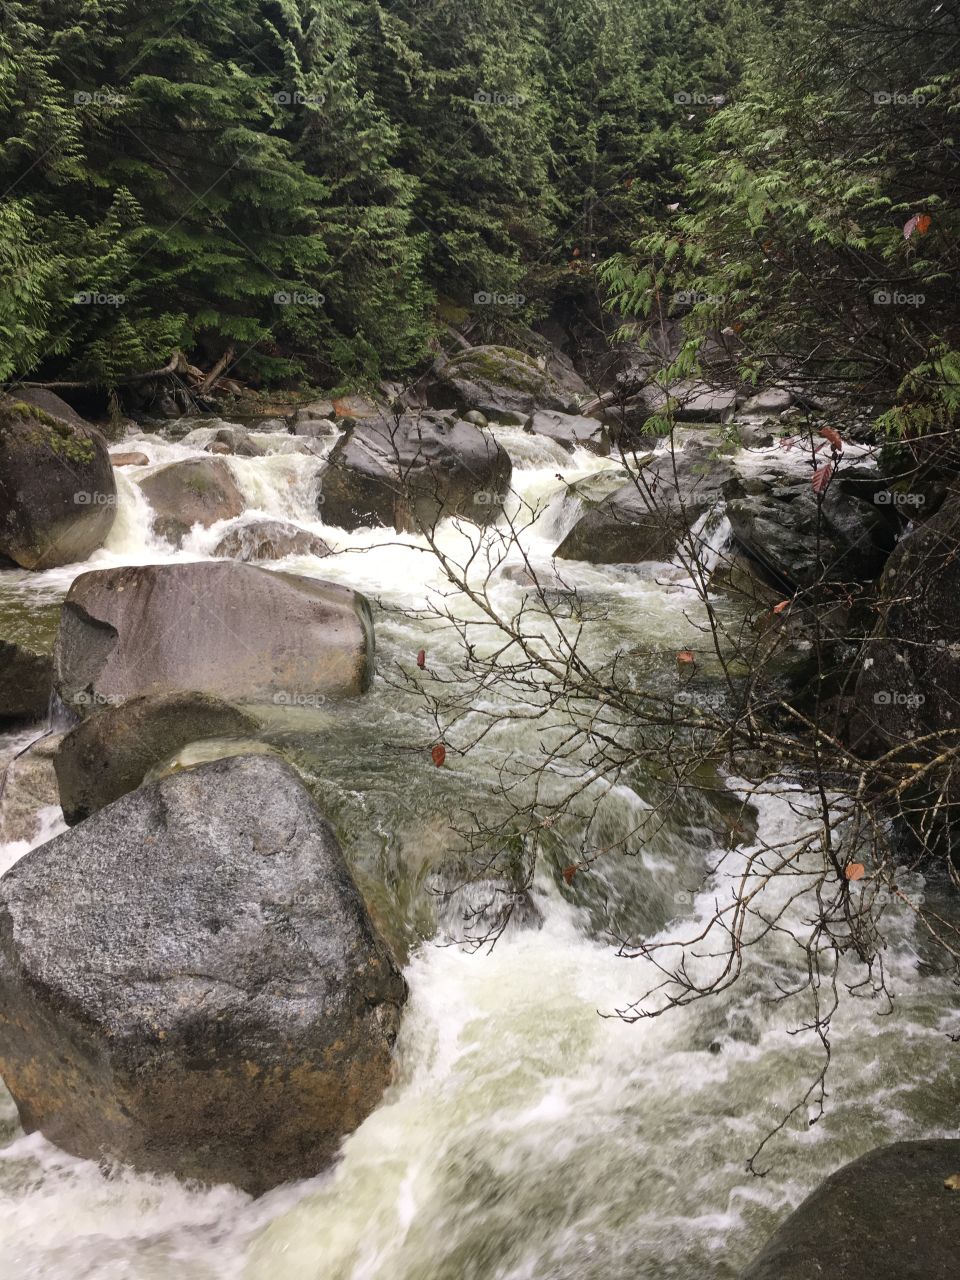 Slippery, slimy river rocks 